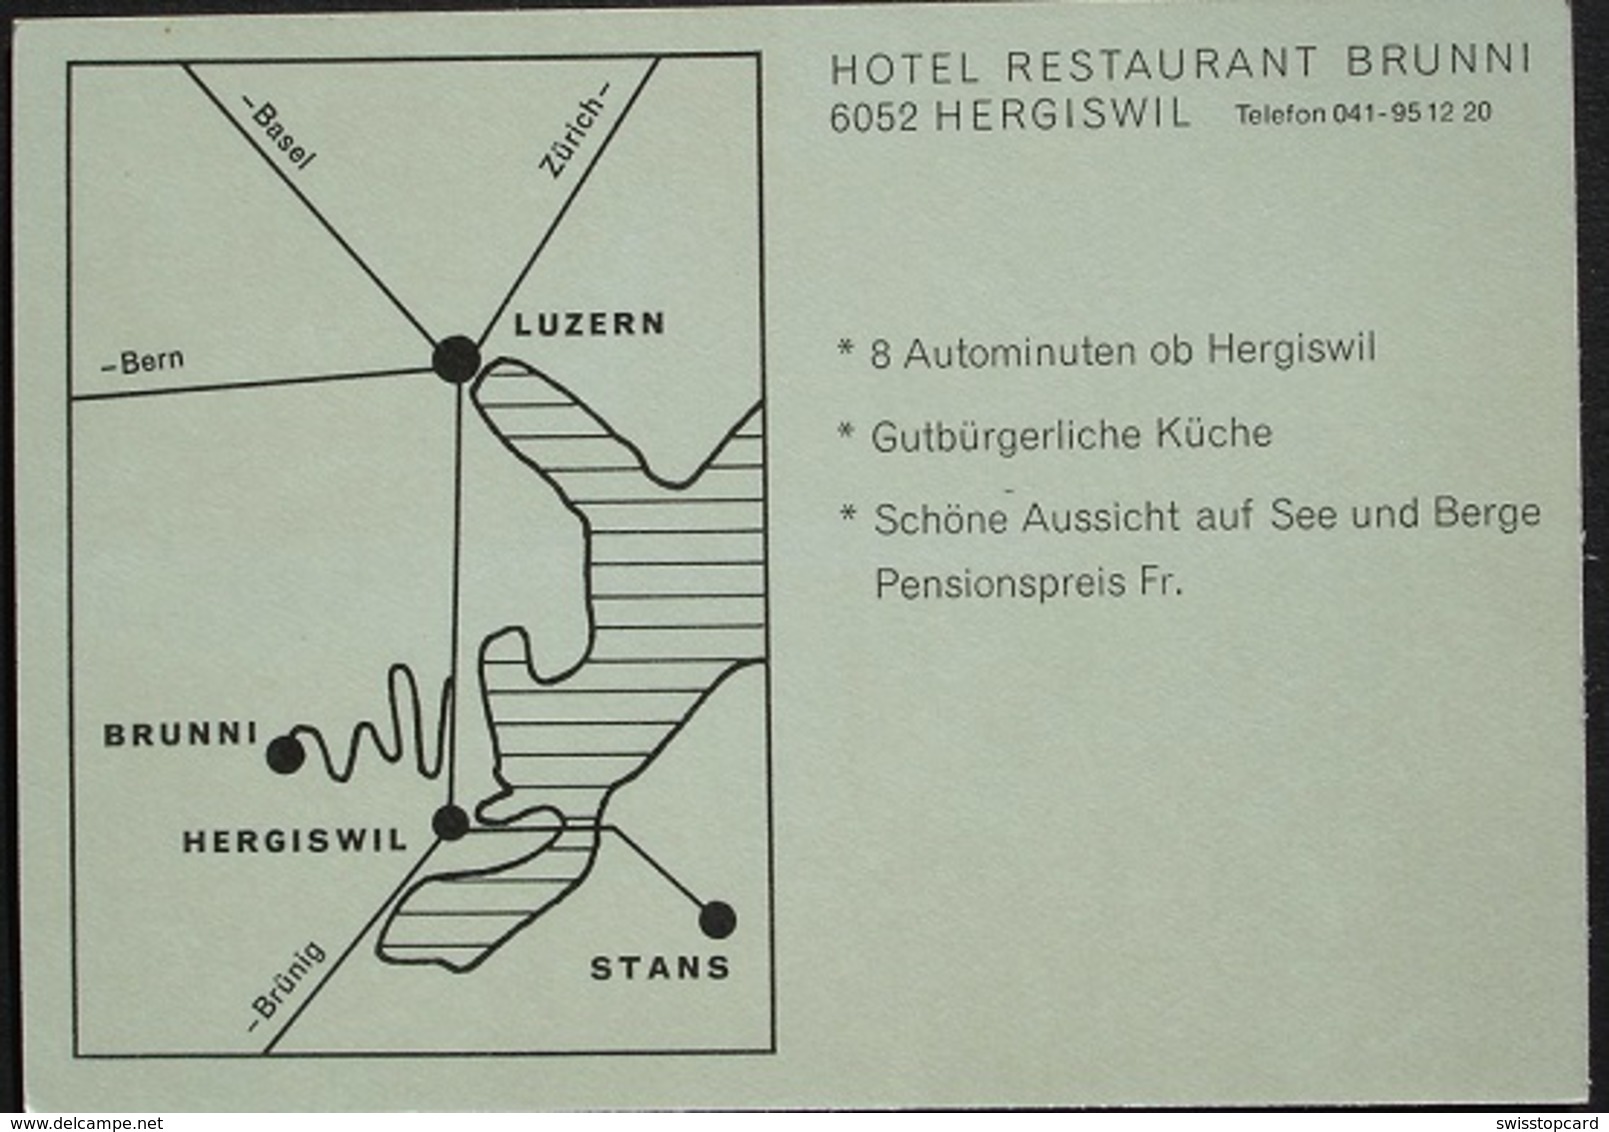 HERGISWIL Werbung Hotel Restaurant Brunni Luftseilbahn - Hergiswil